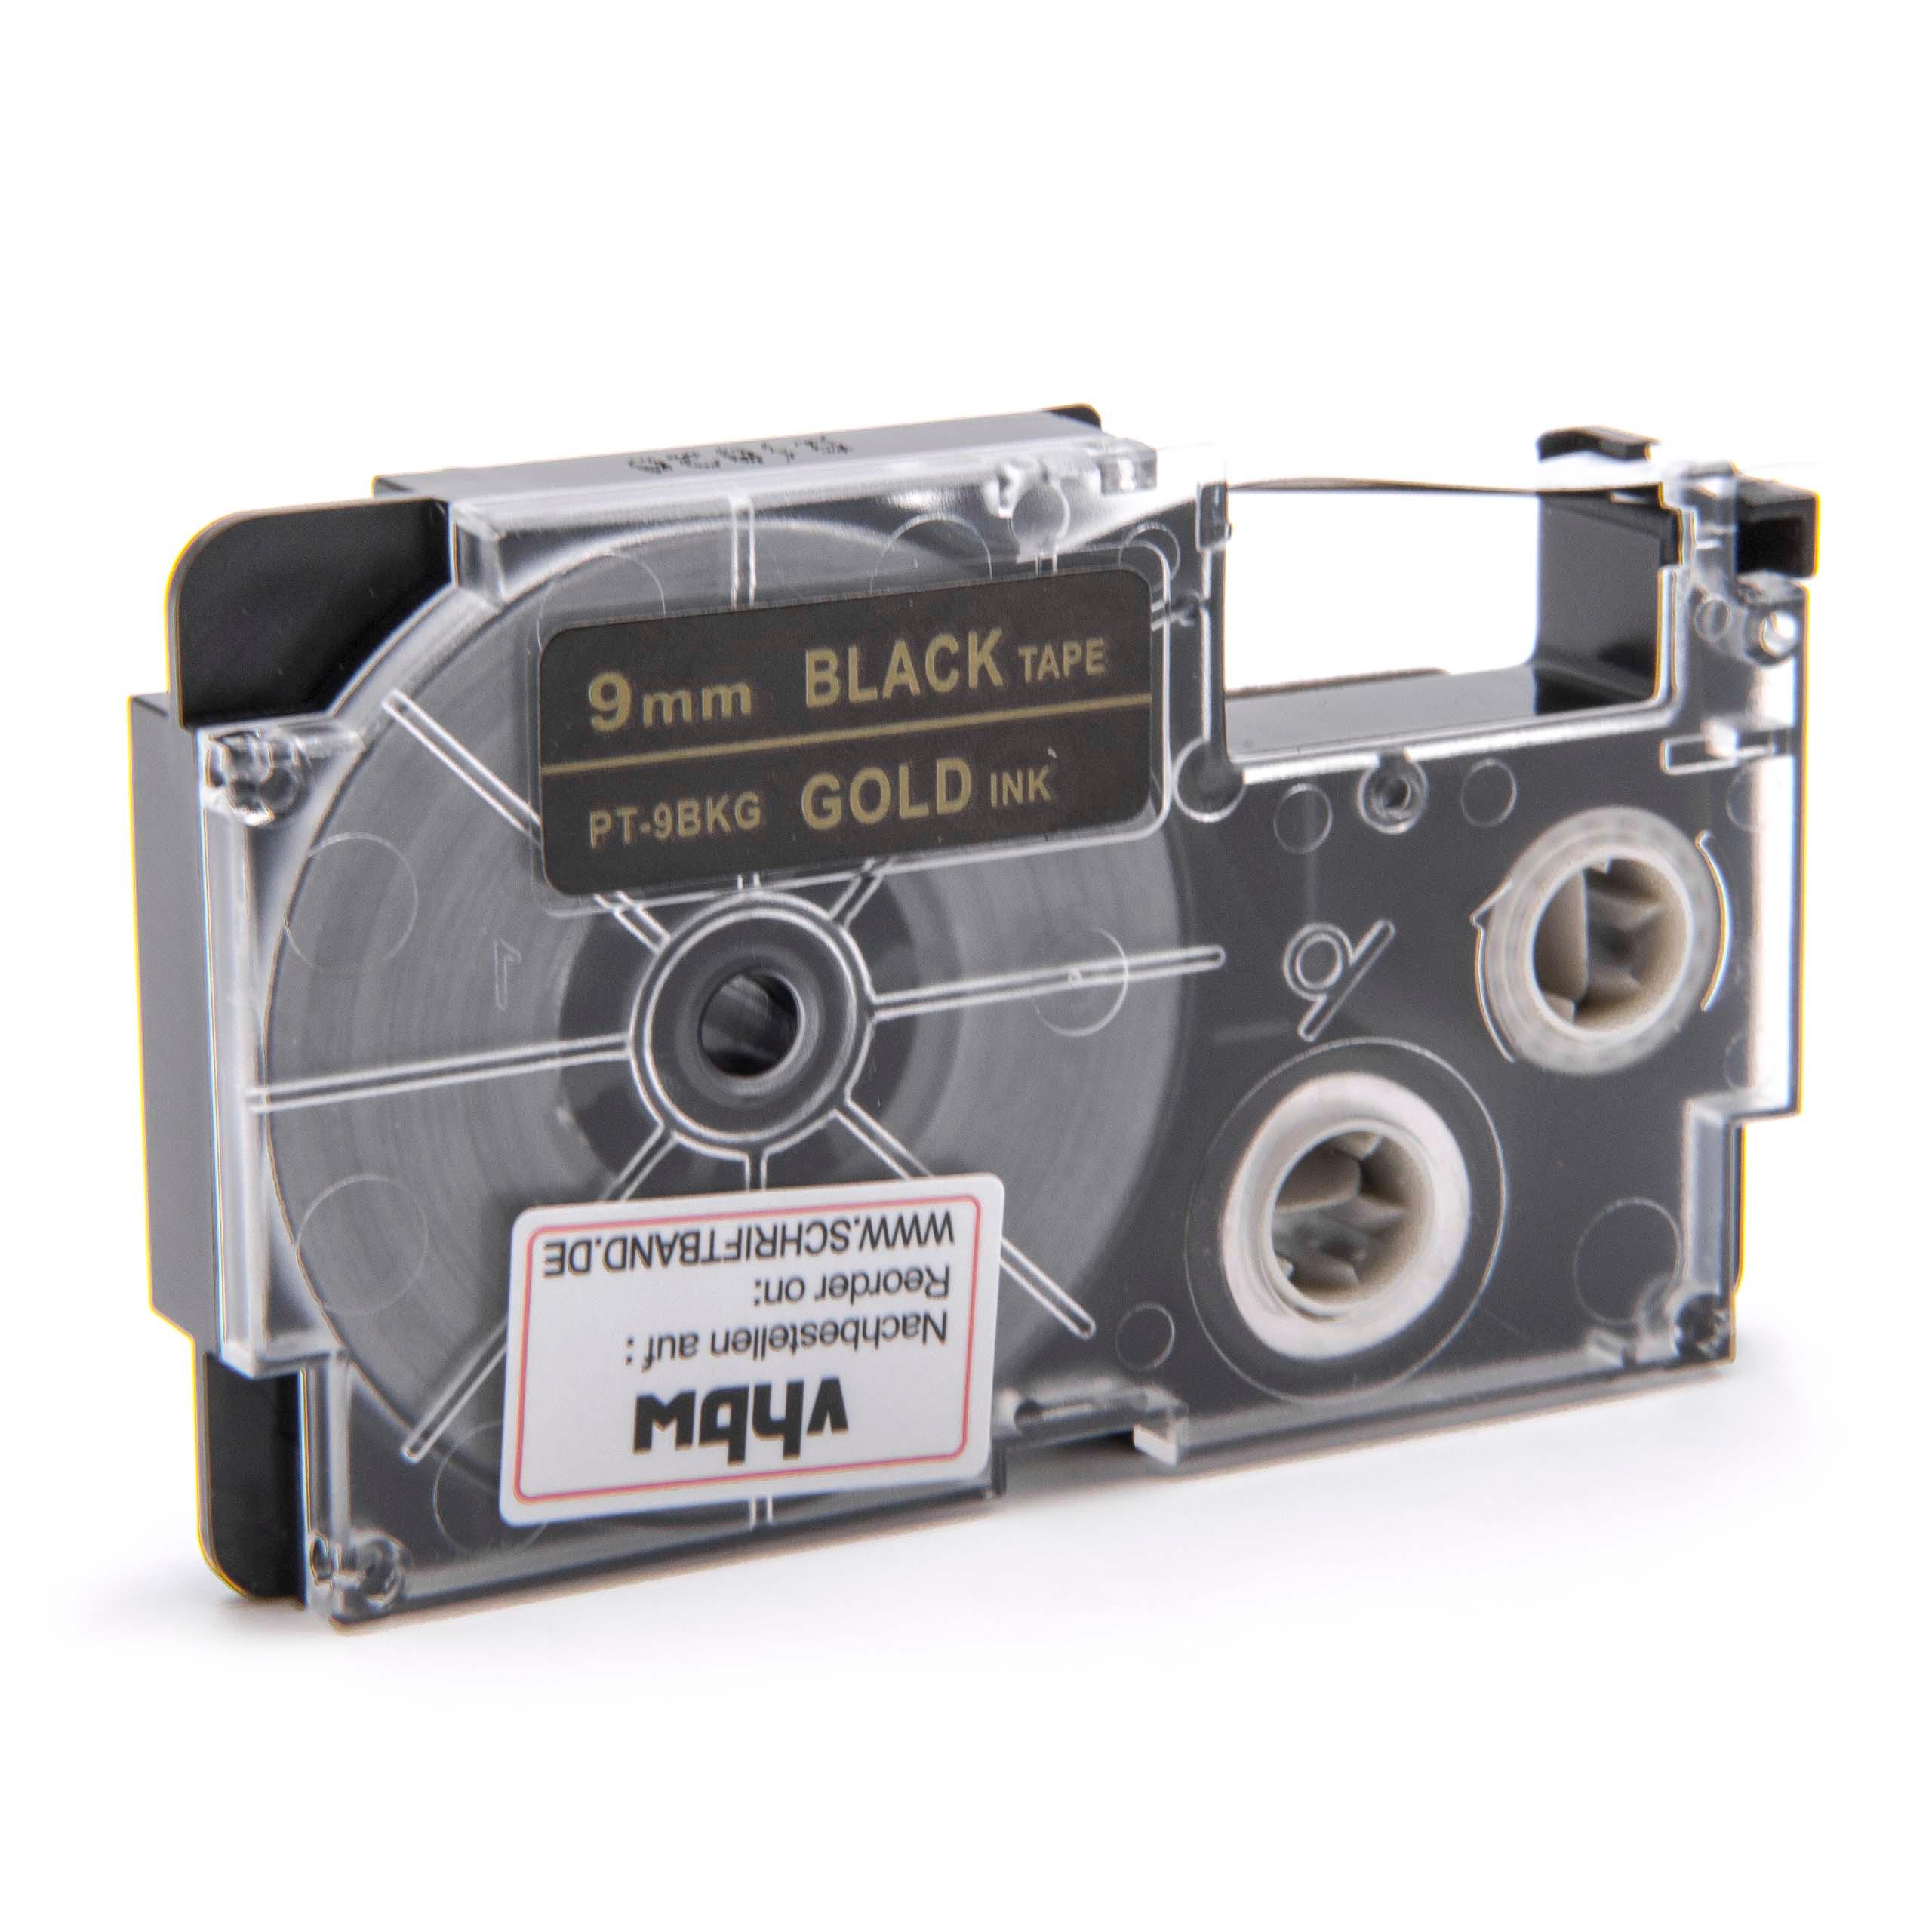 Cassetta nastro sostituisce Casio XR-9BKG1, XR-9BKG per etichettatrice Casio 9mm dorato su nero